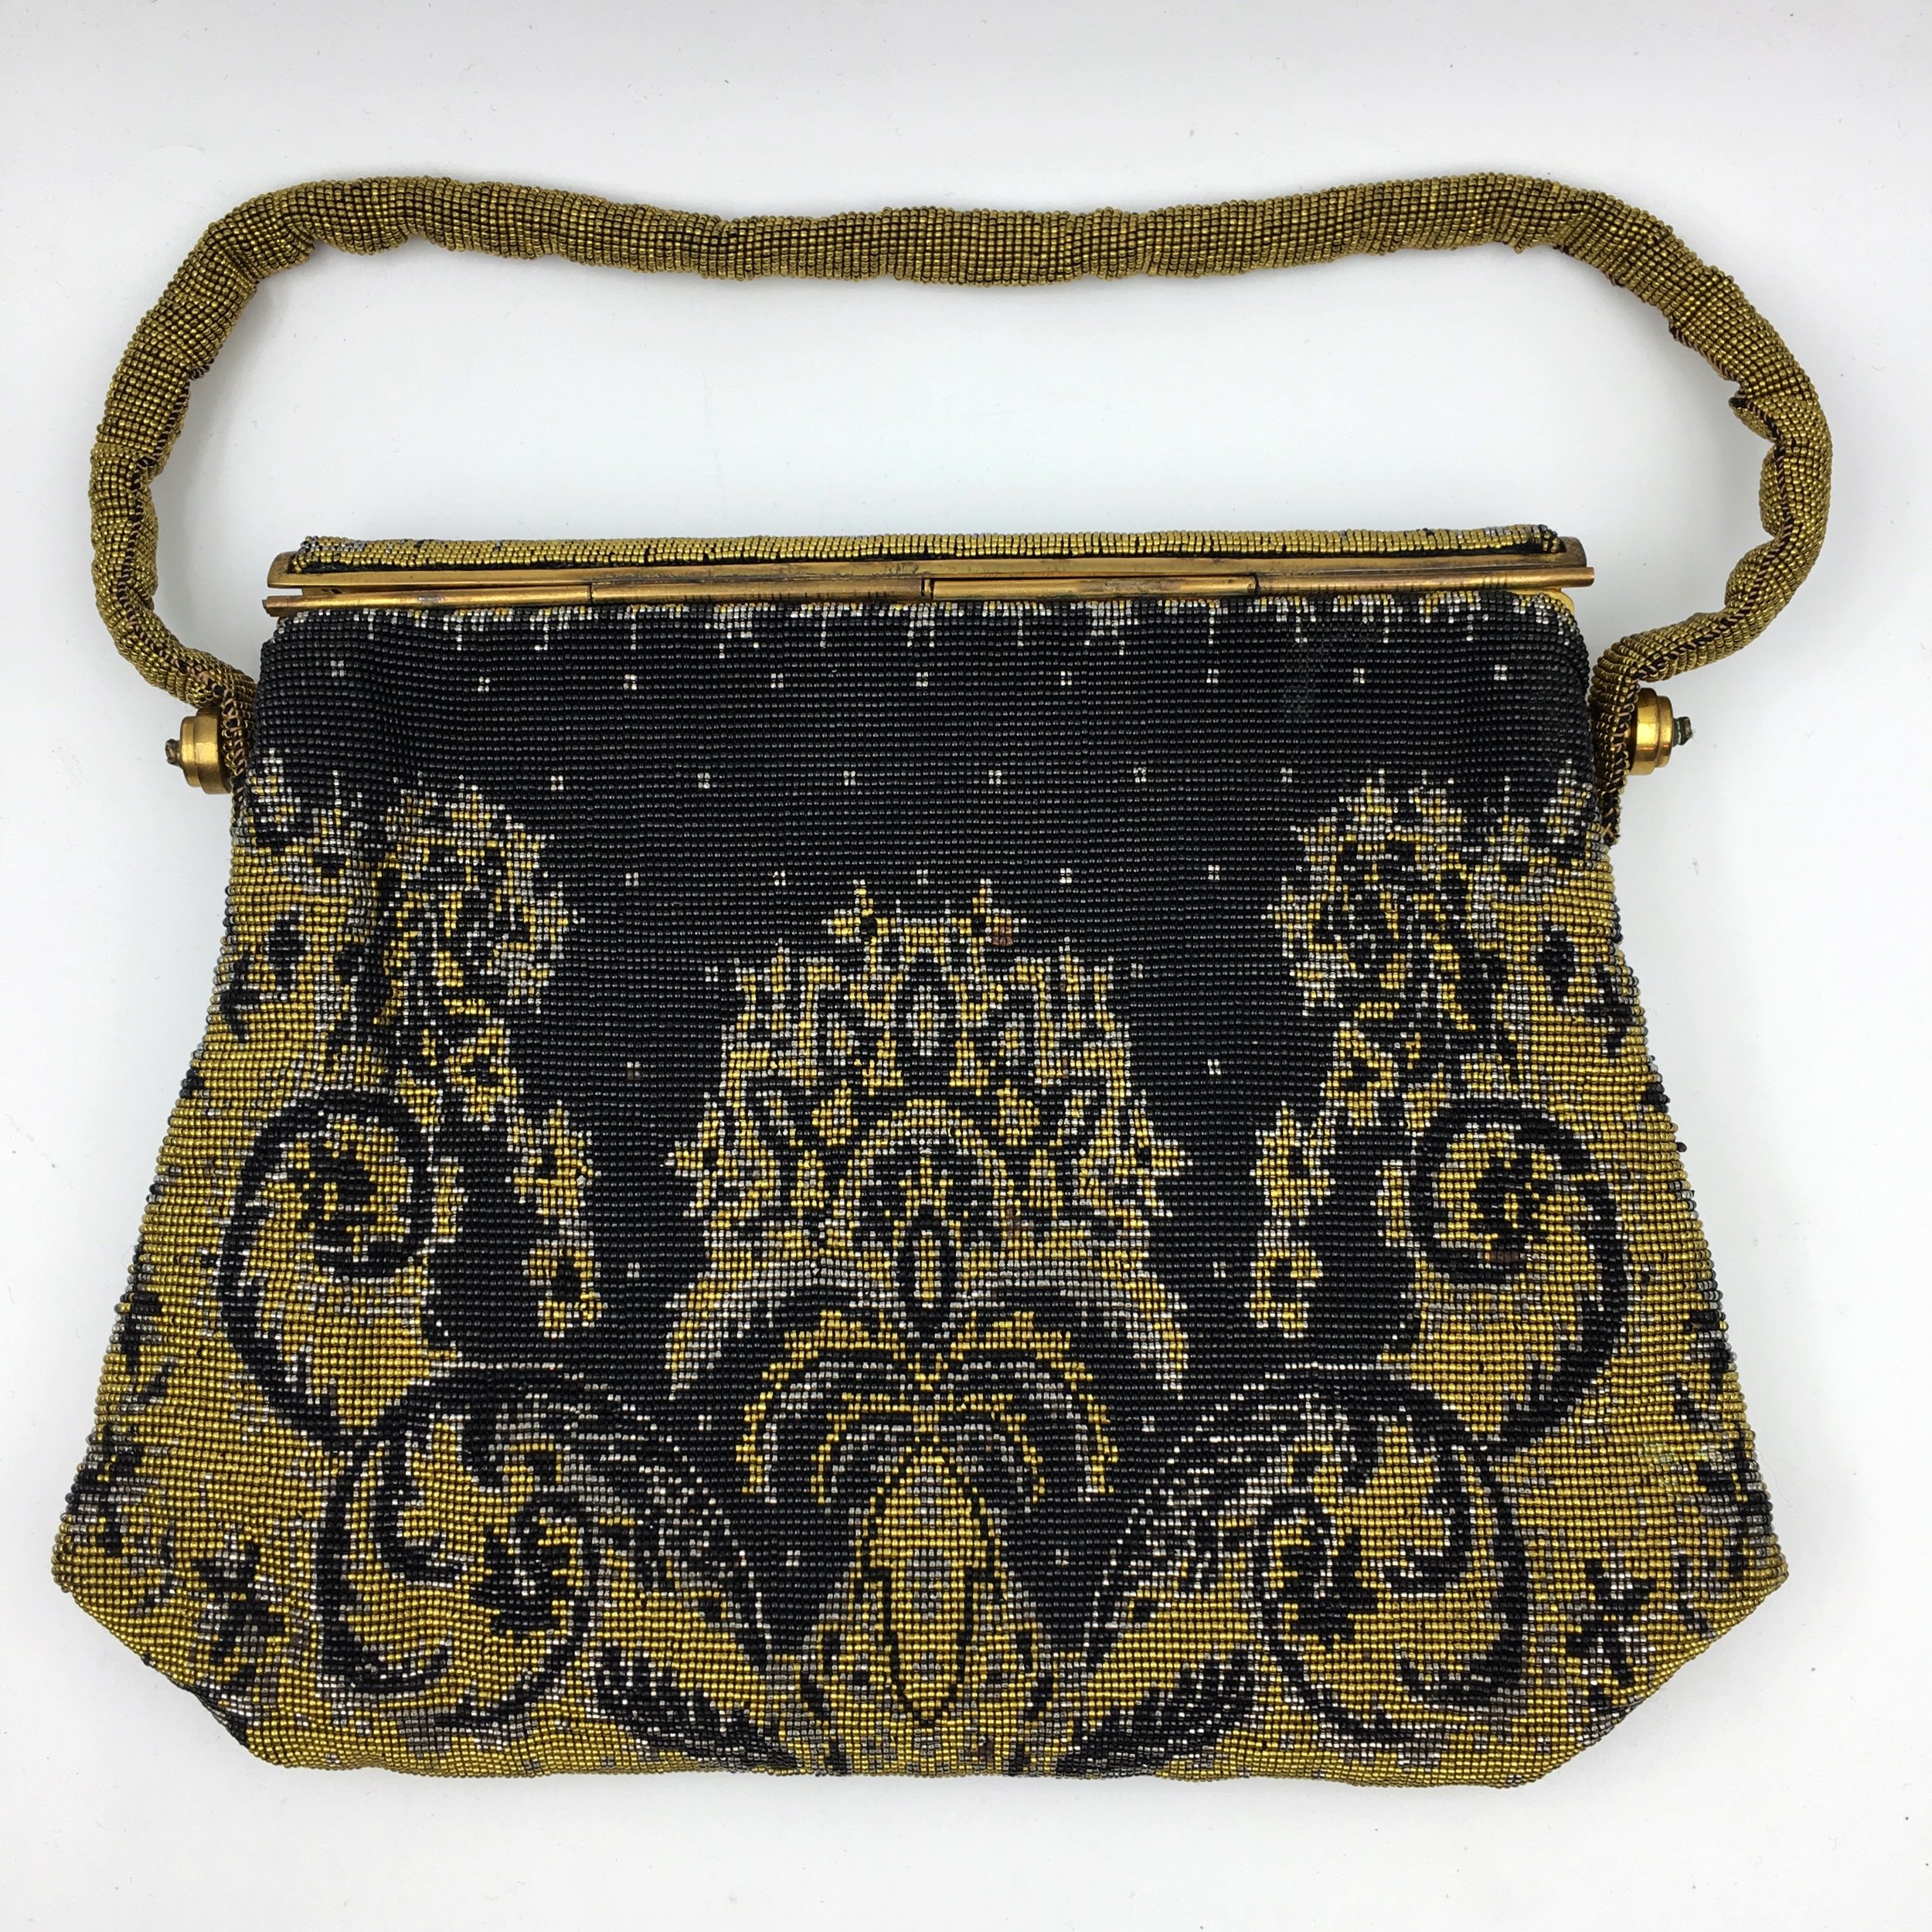 Antique 1920s Micro Beaded Evening Bag, Made In France for George Baring  Paris, gold silver beading rhinestone handbag, Metallic vintage bag